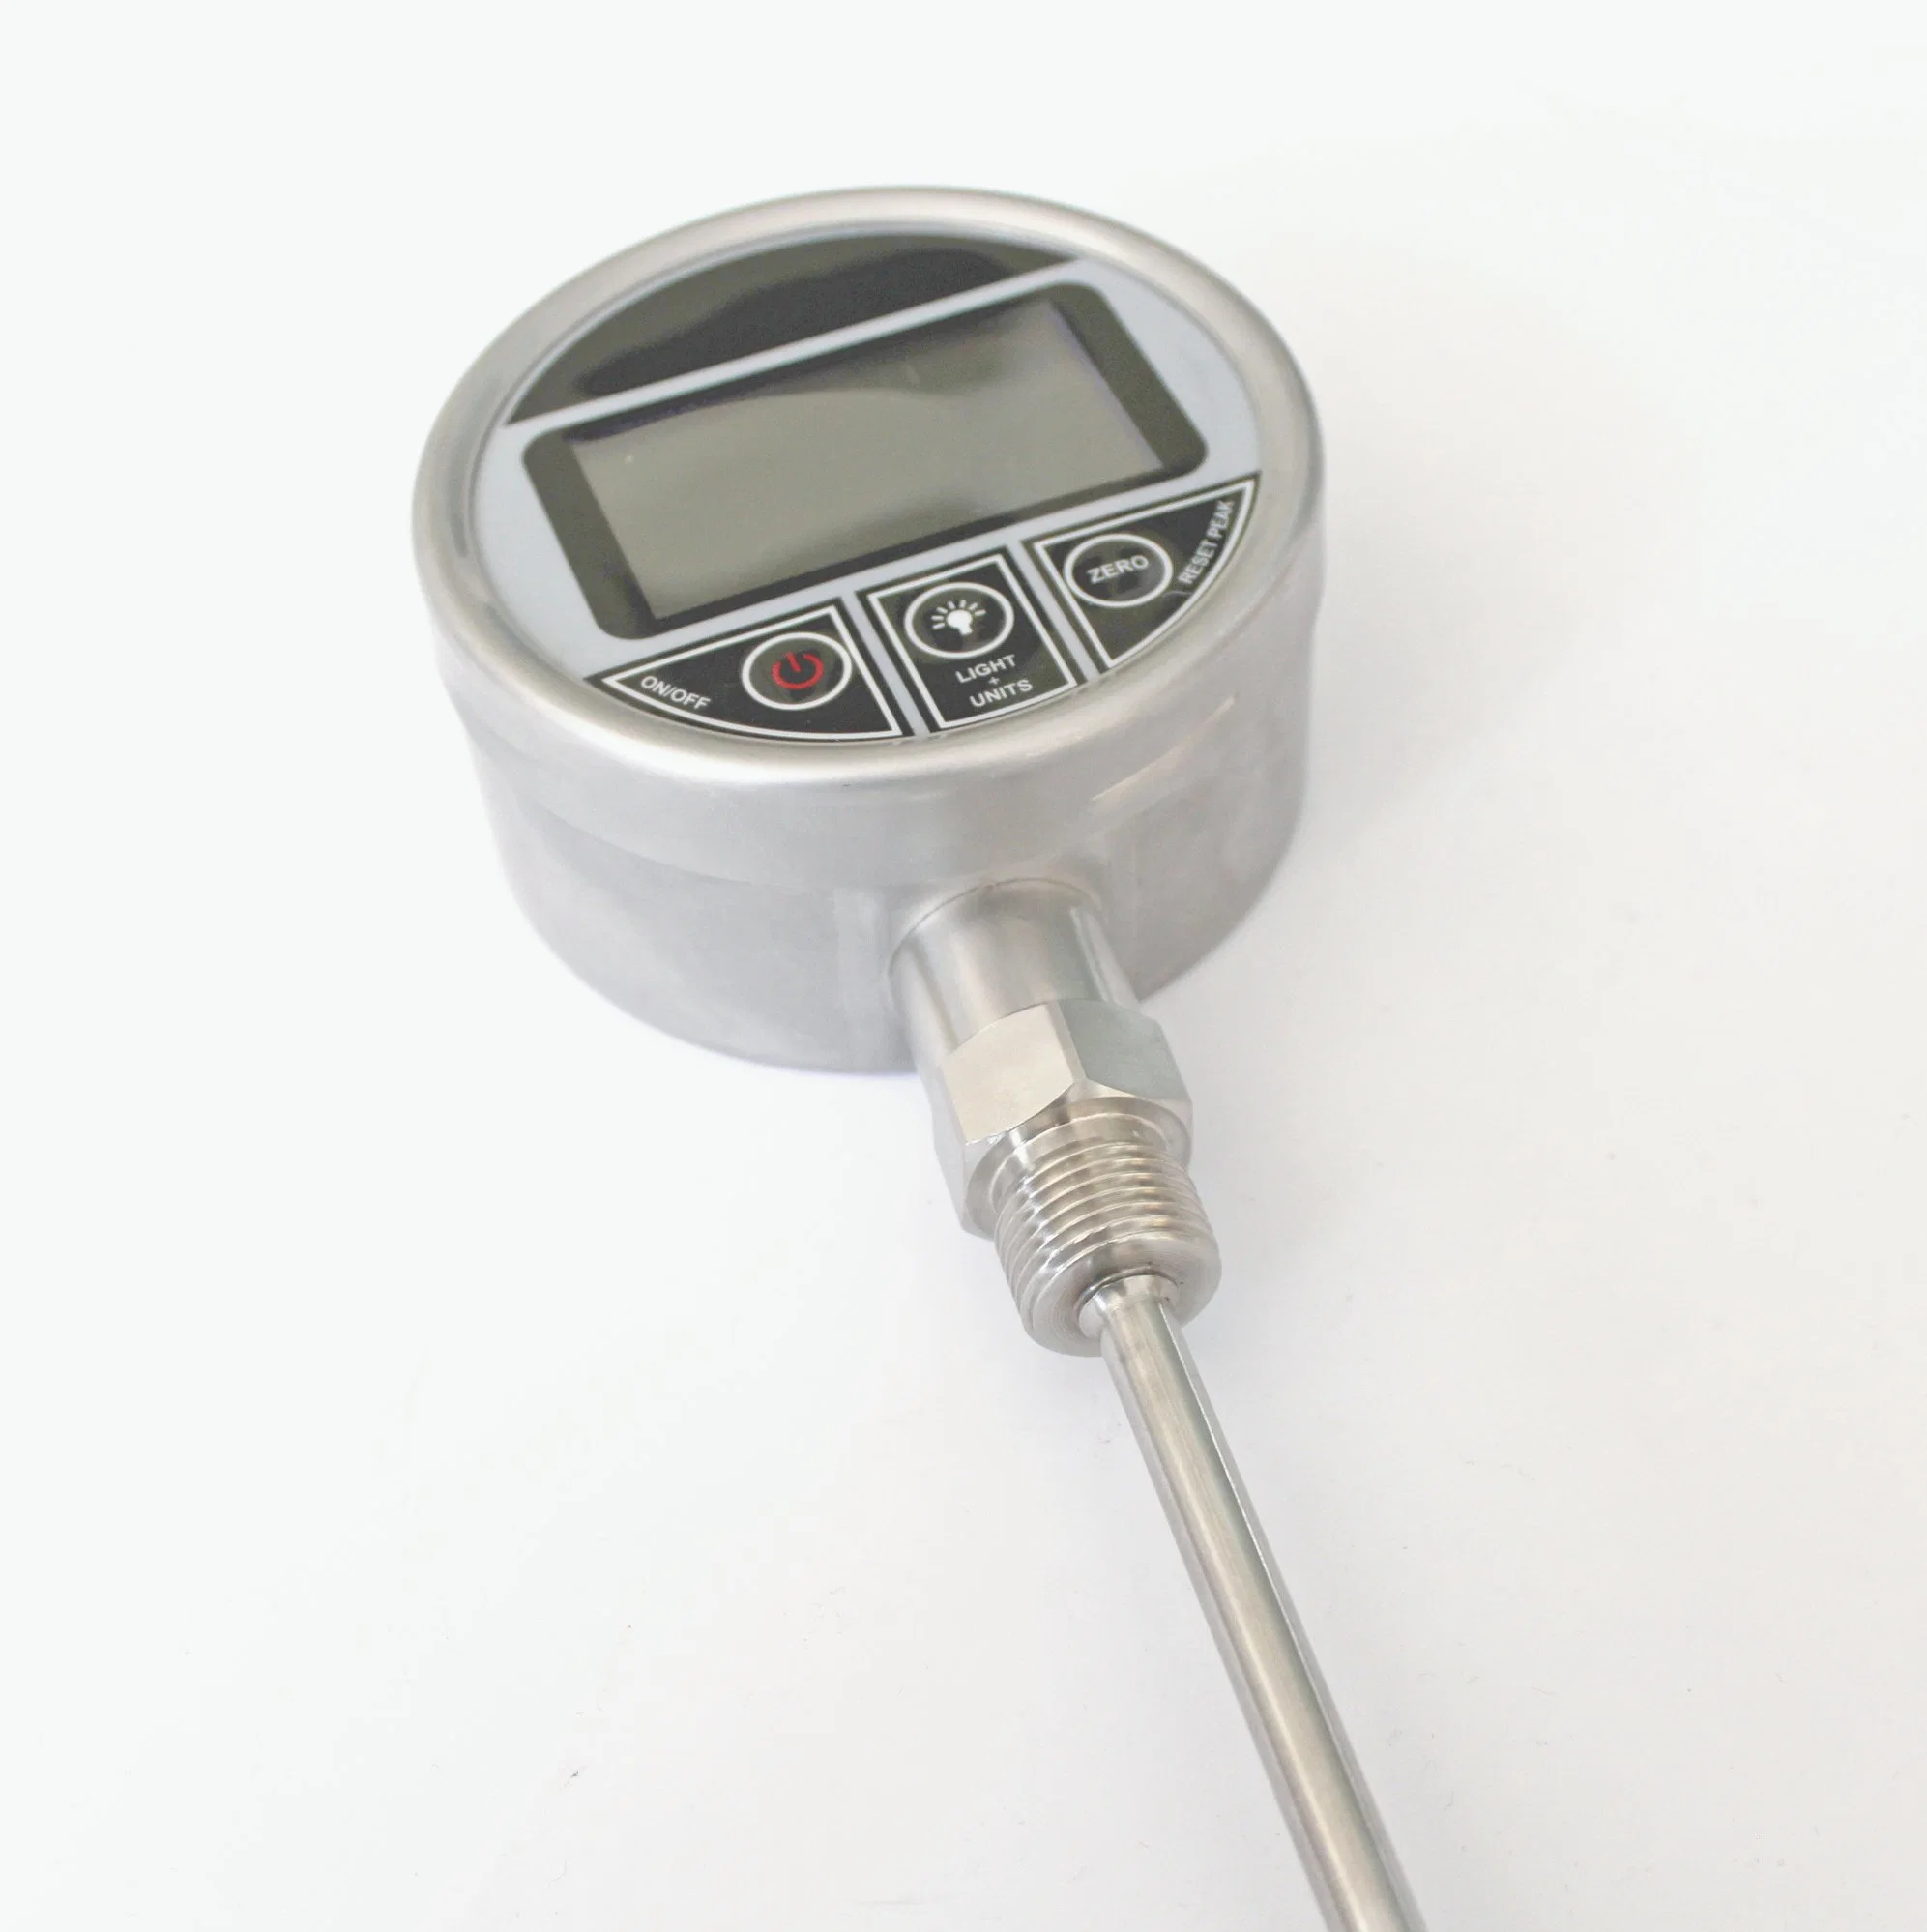 Аккумуляторная батарея - мощная горячая вода с термомасляным цифровым температурным индикатором